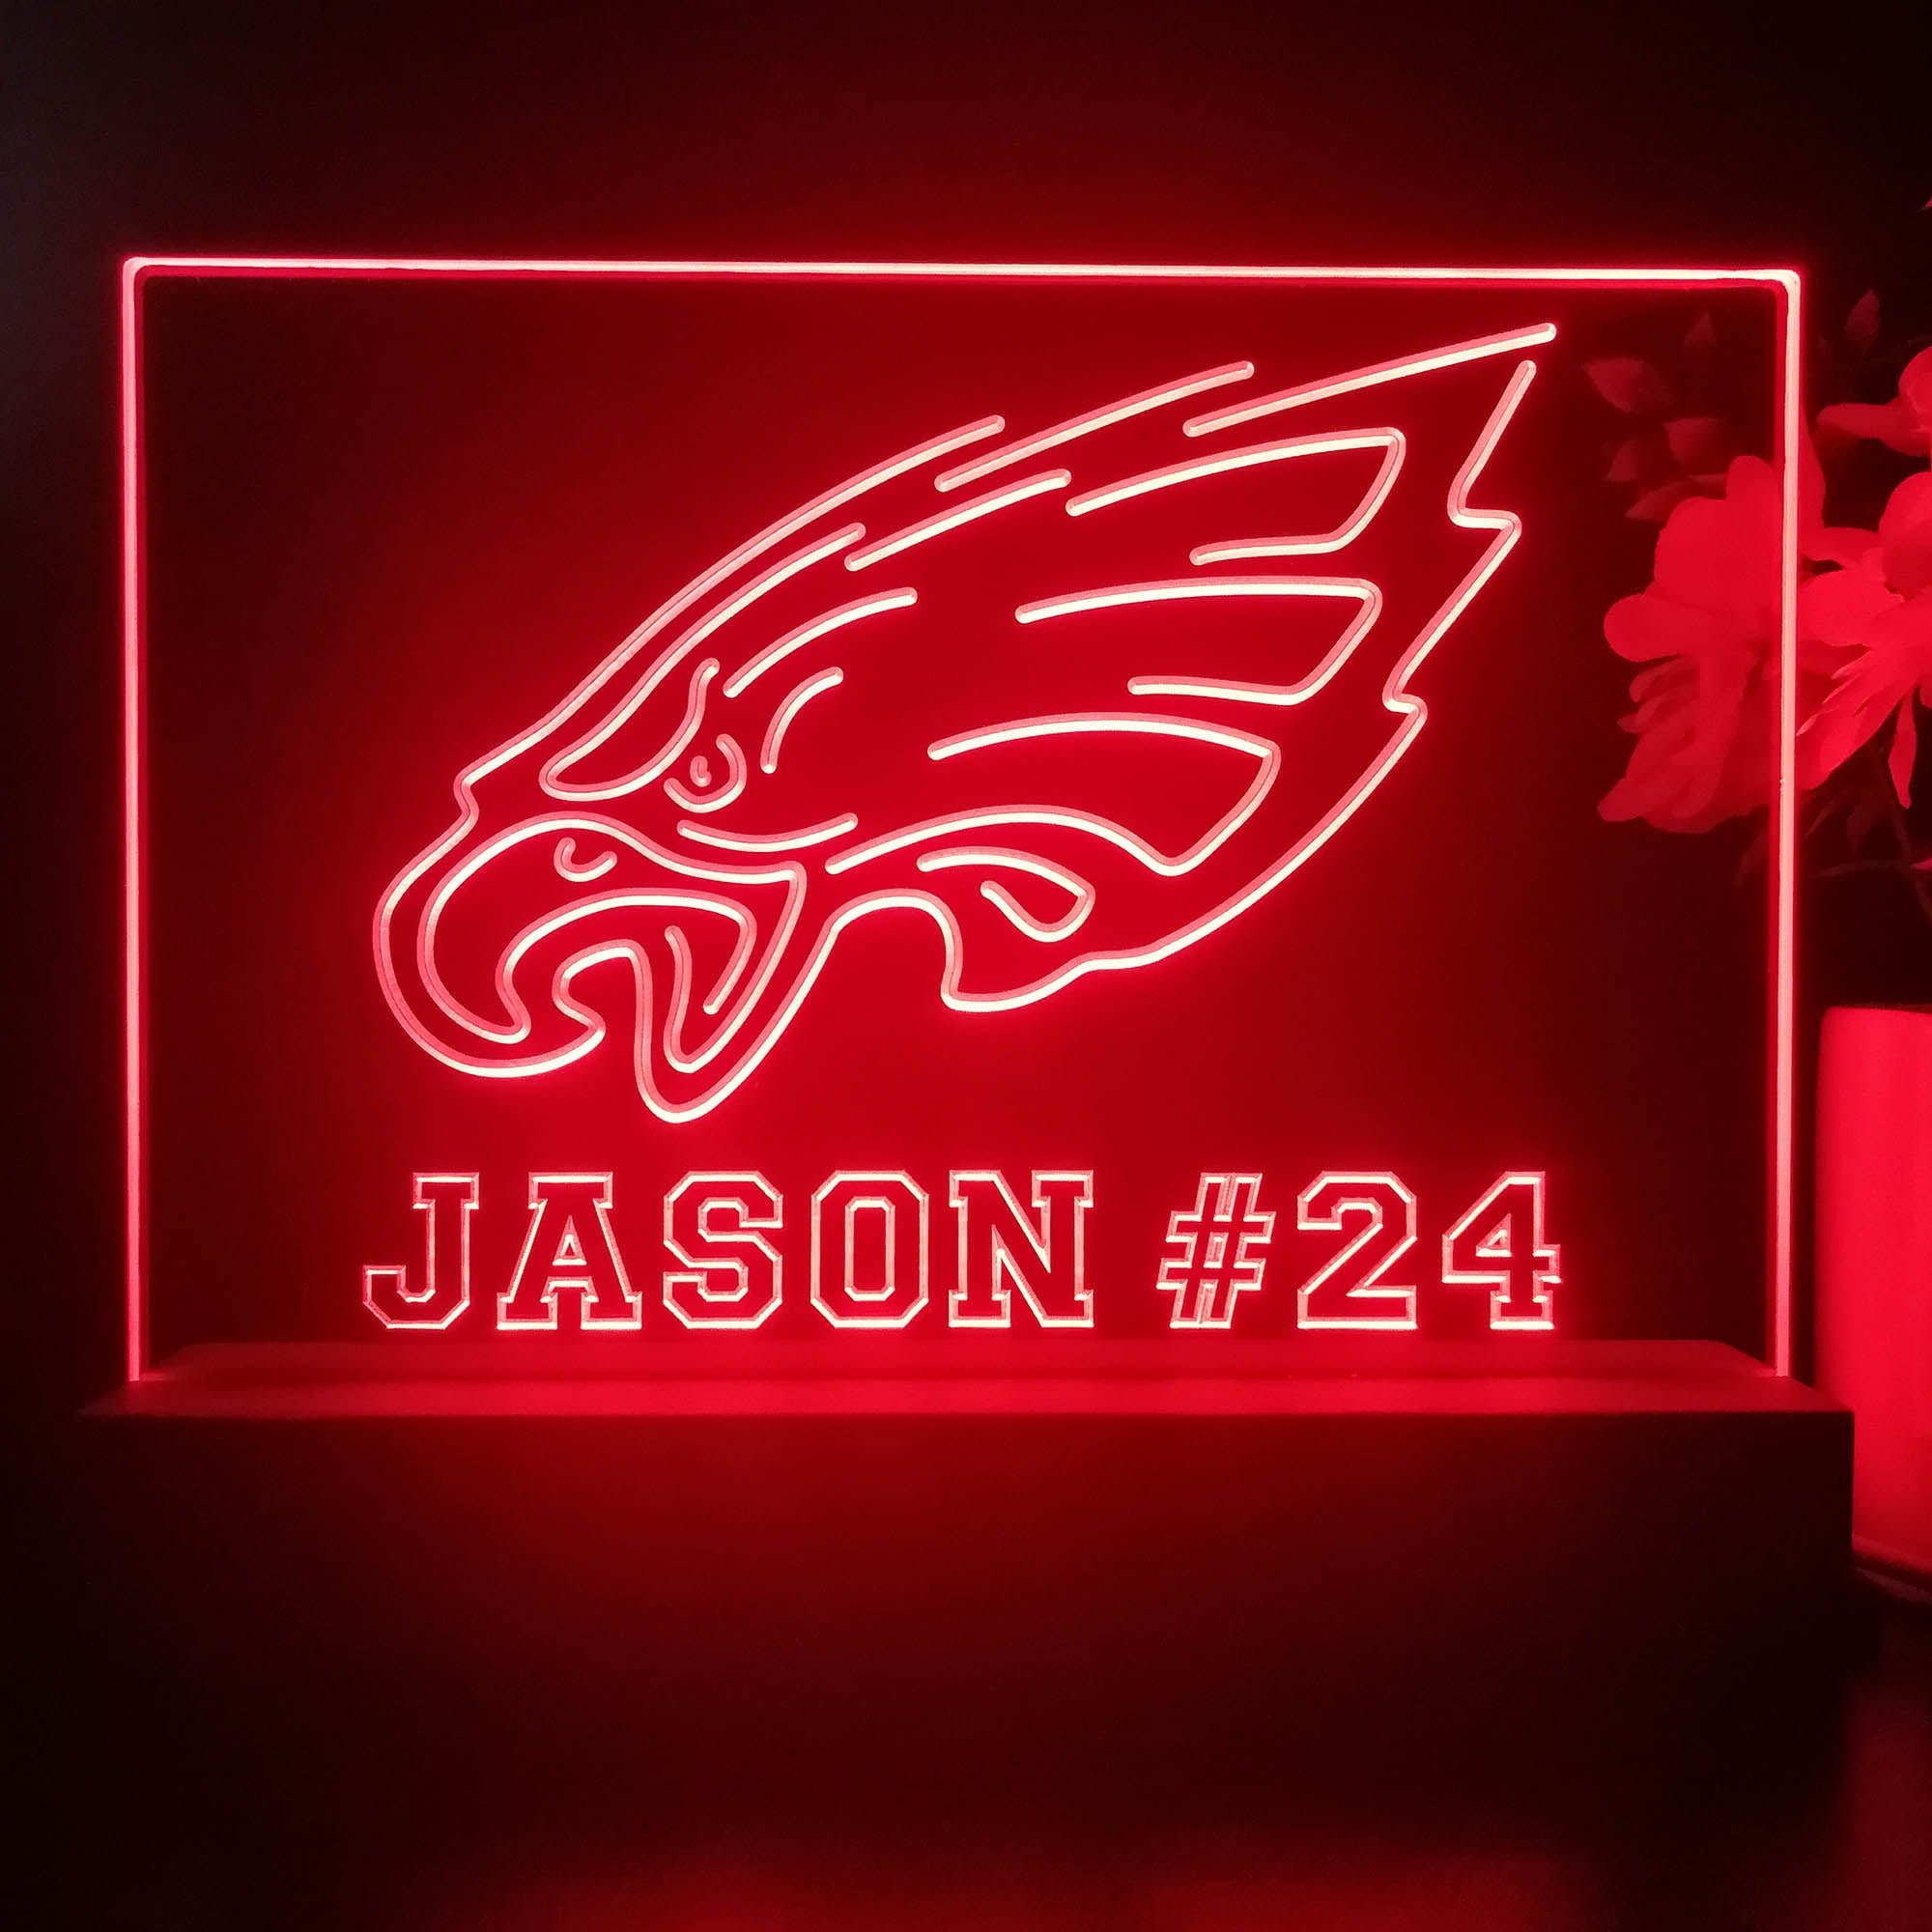 Personalized Philadelphia Eagles Souvenir Neon LED Night Light Sign